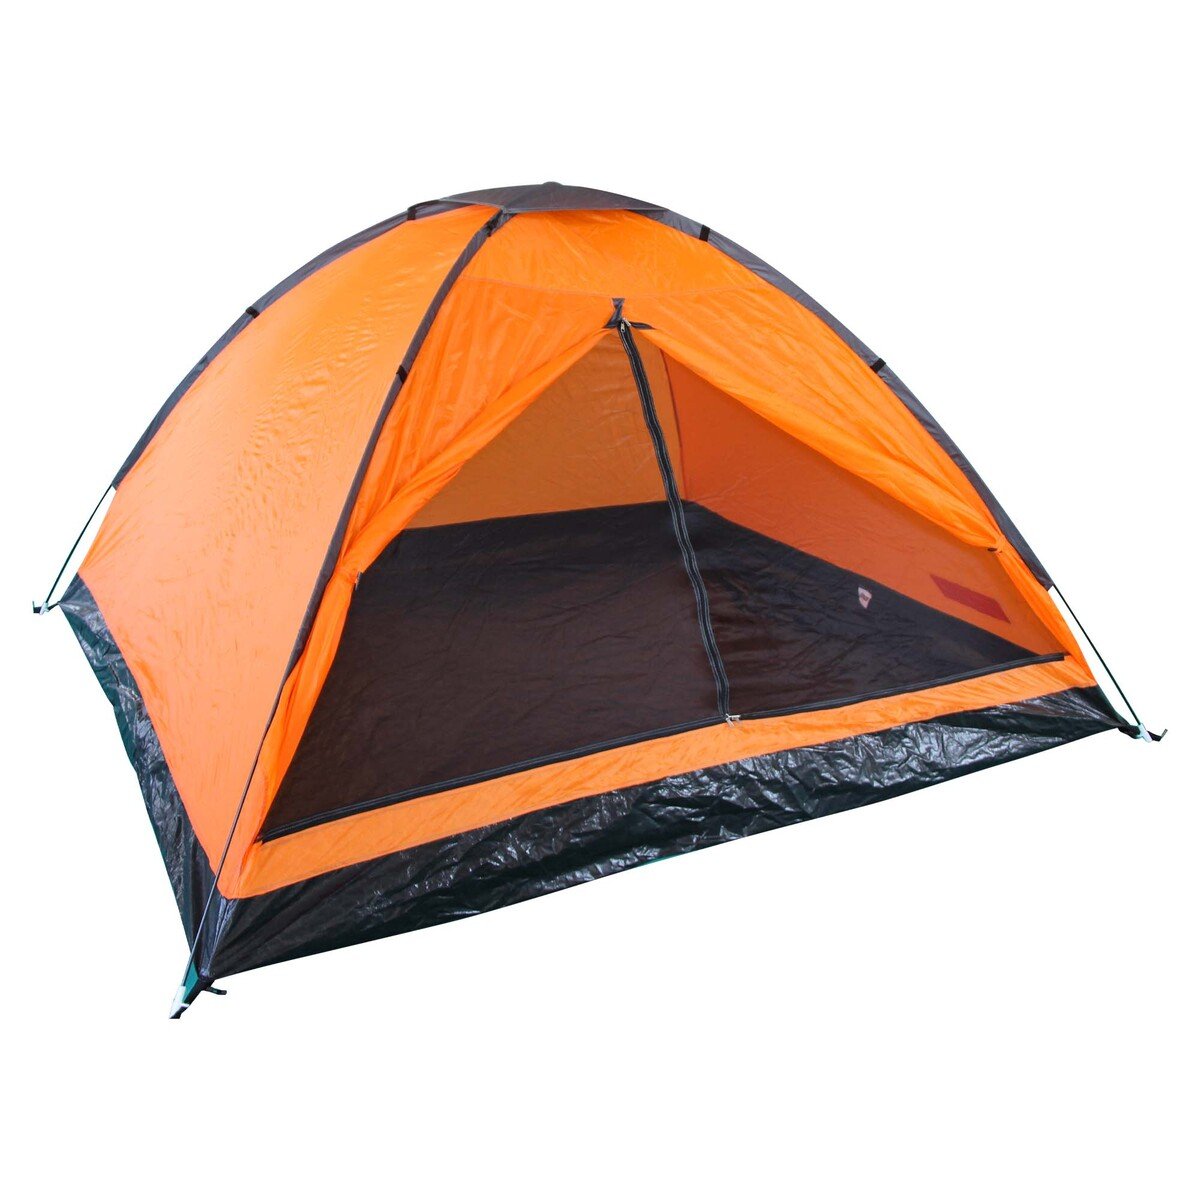 Relax Camping Tent, Orange, 240x240x150 cm